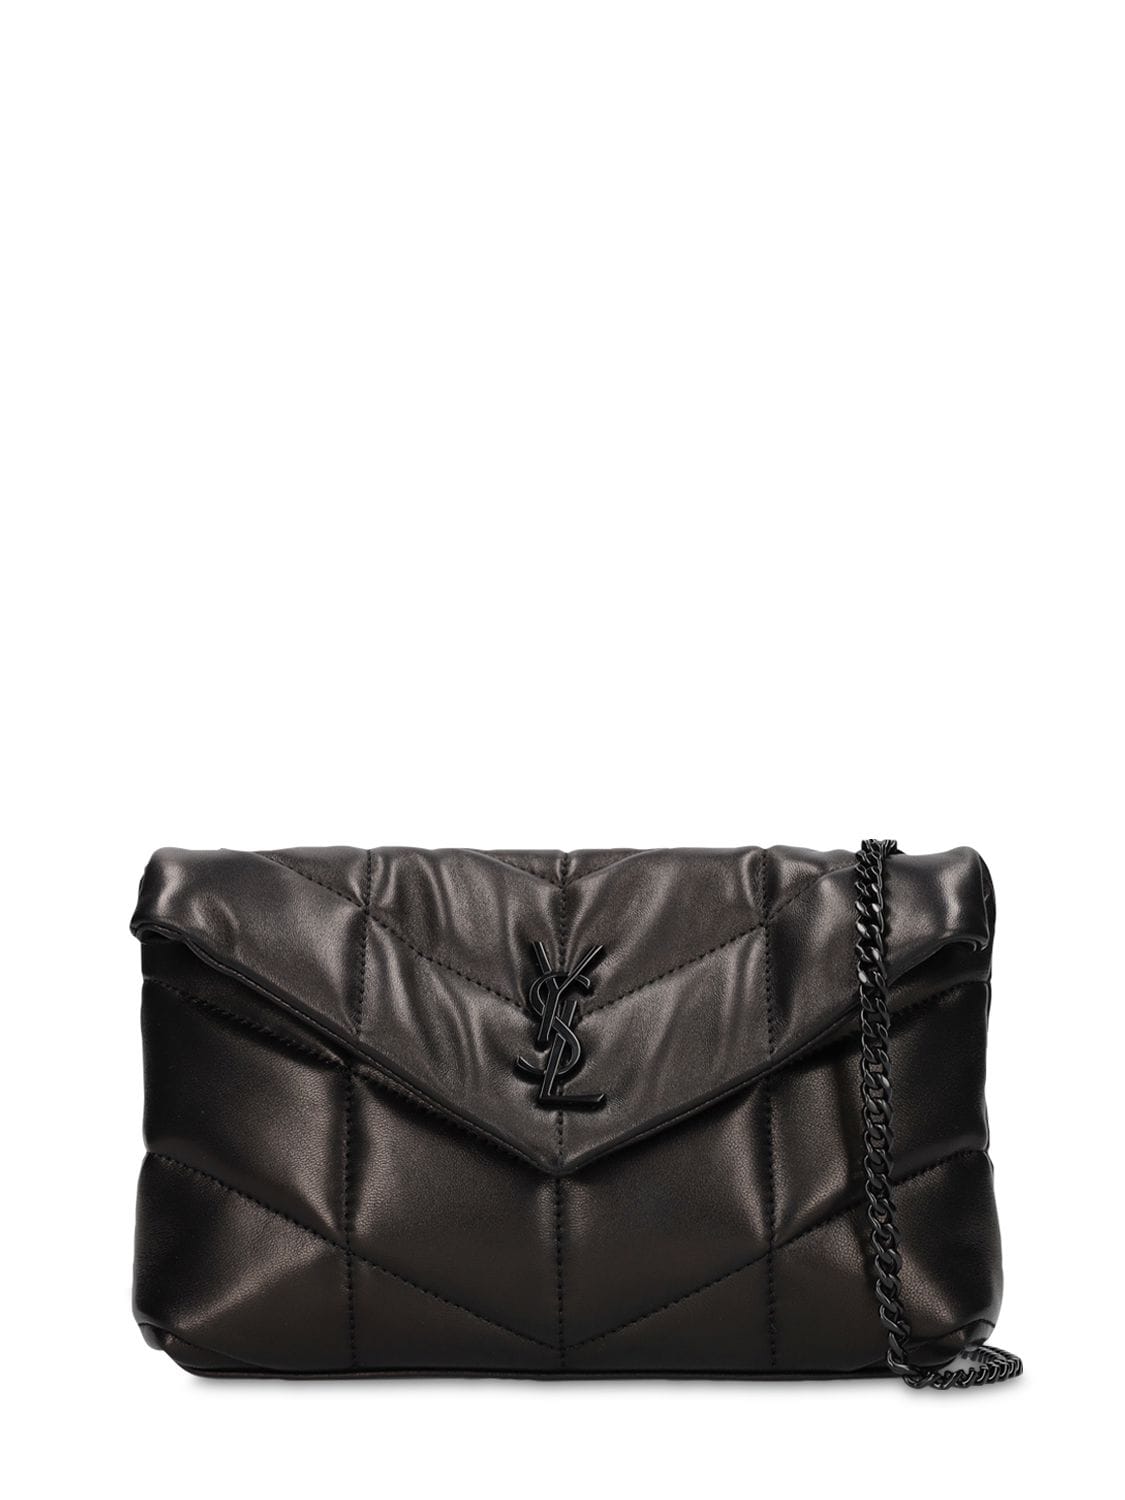 SAINT LAURENT Mini Puffer Loulou Leather Bag